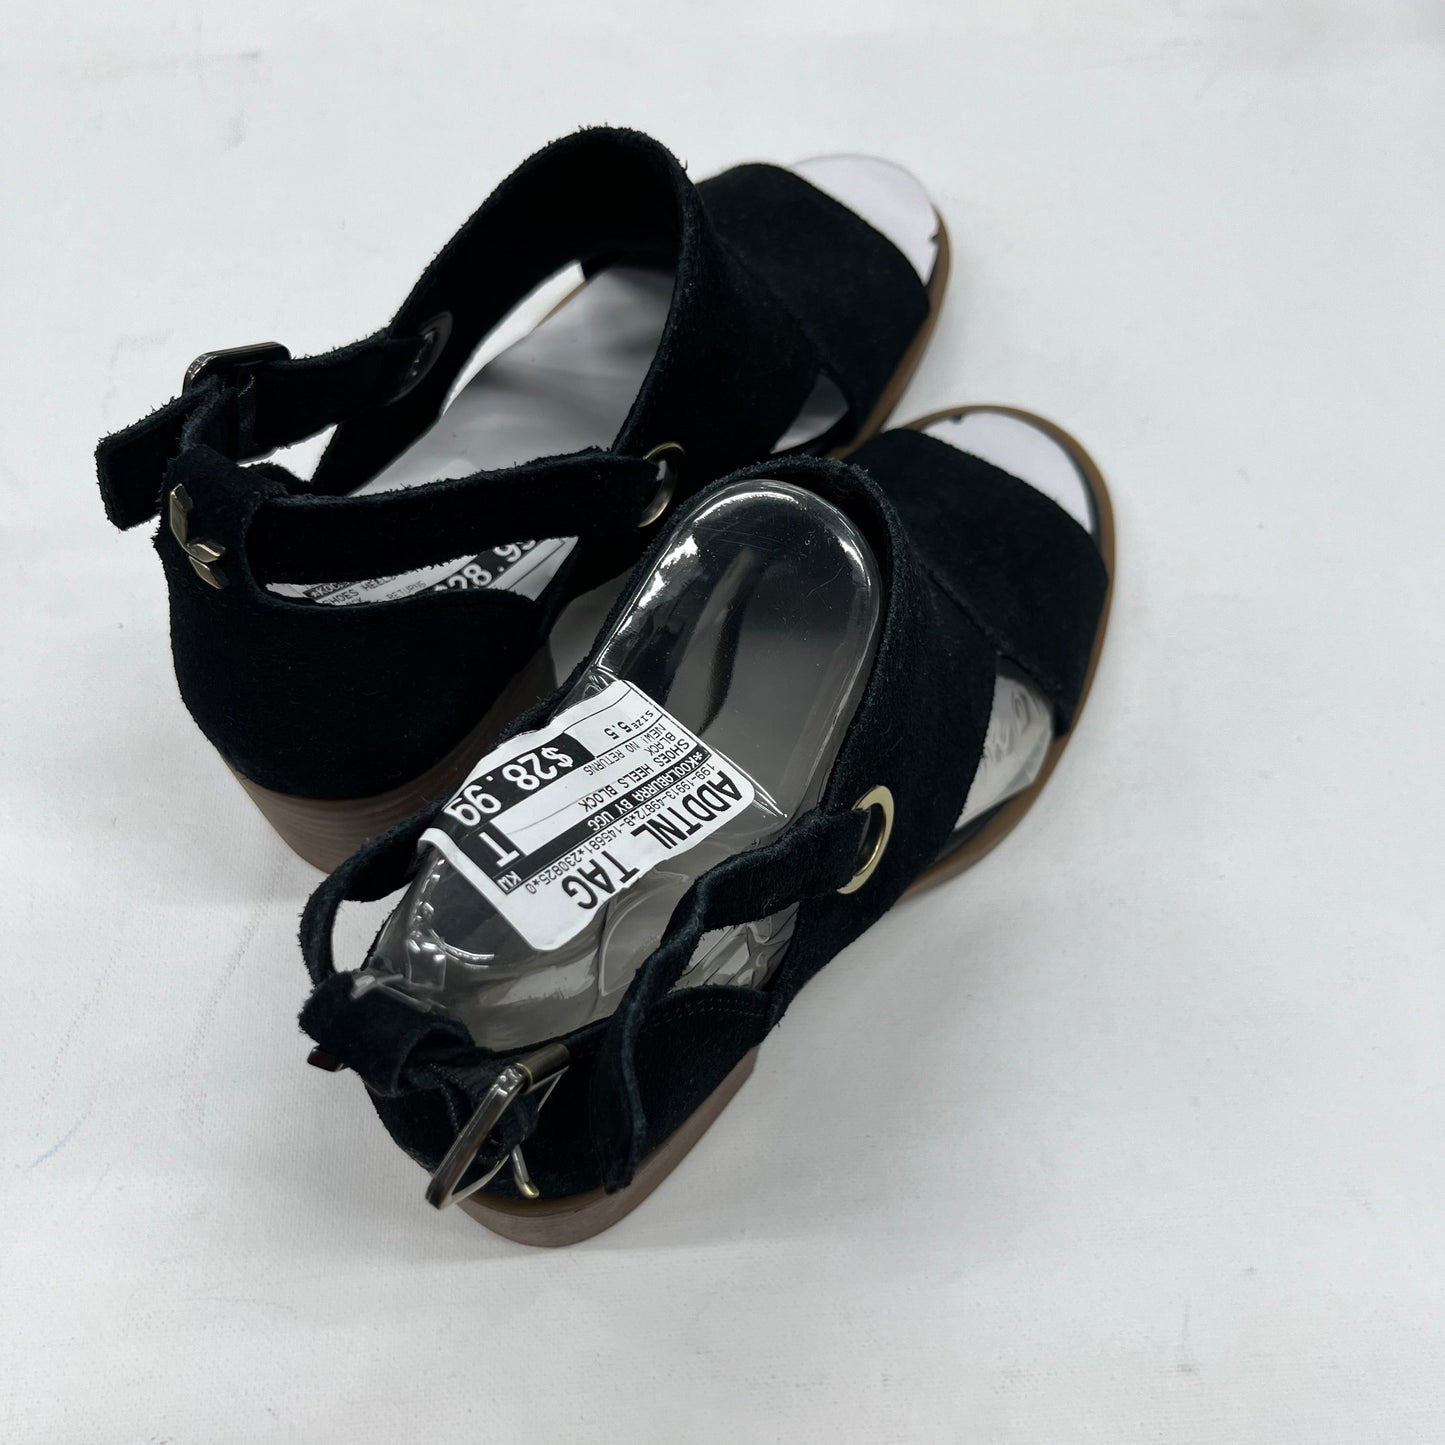 Shoes Heels Block By Koolaburra By Ugg  Size: 5.5